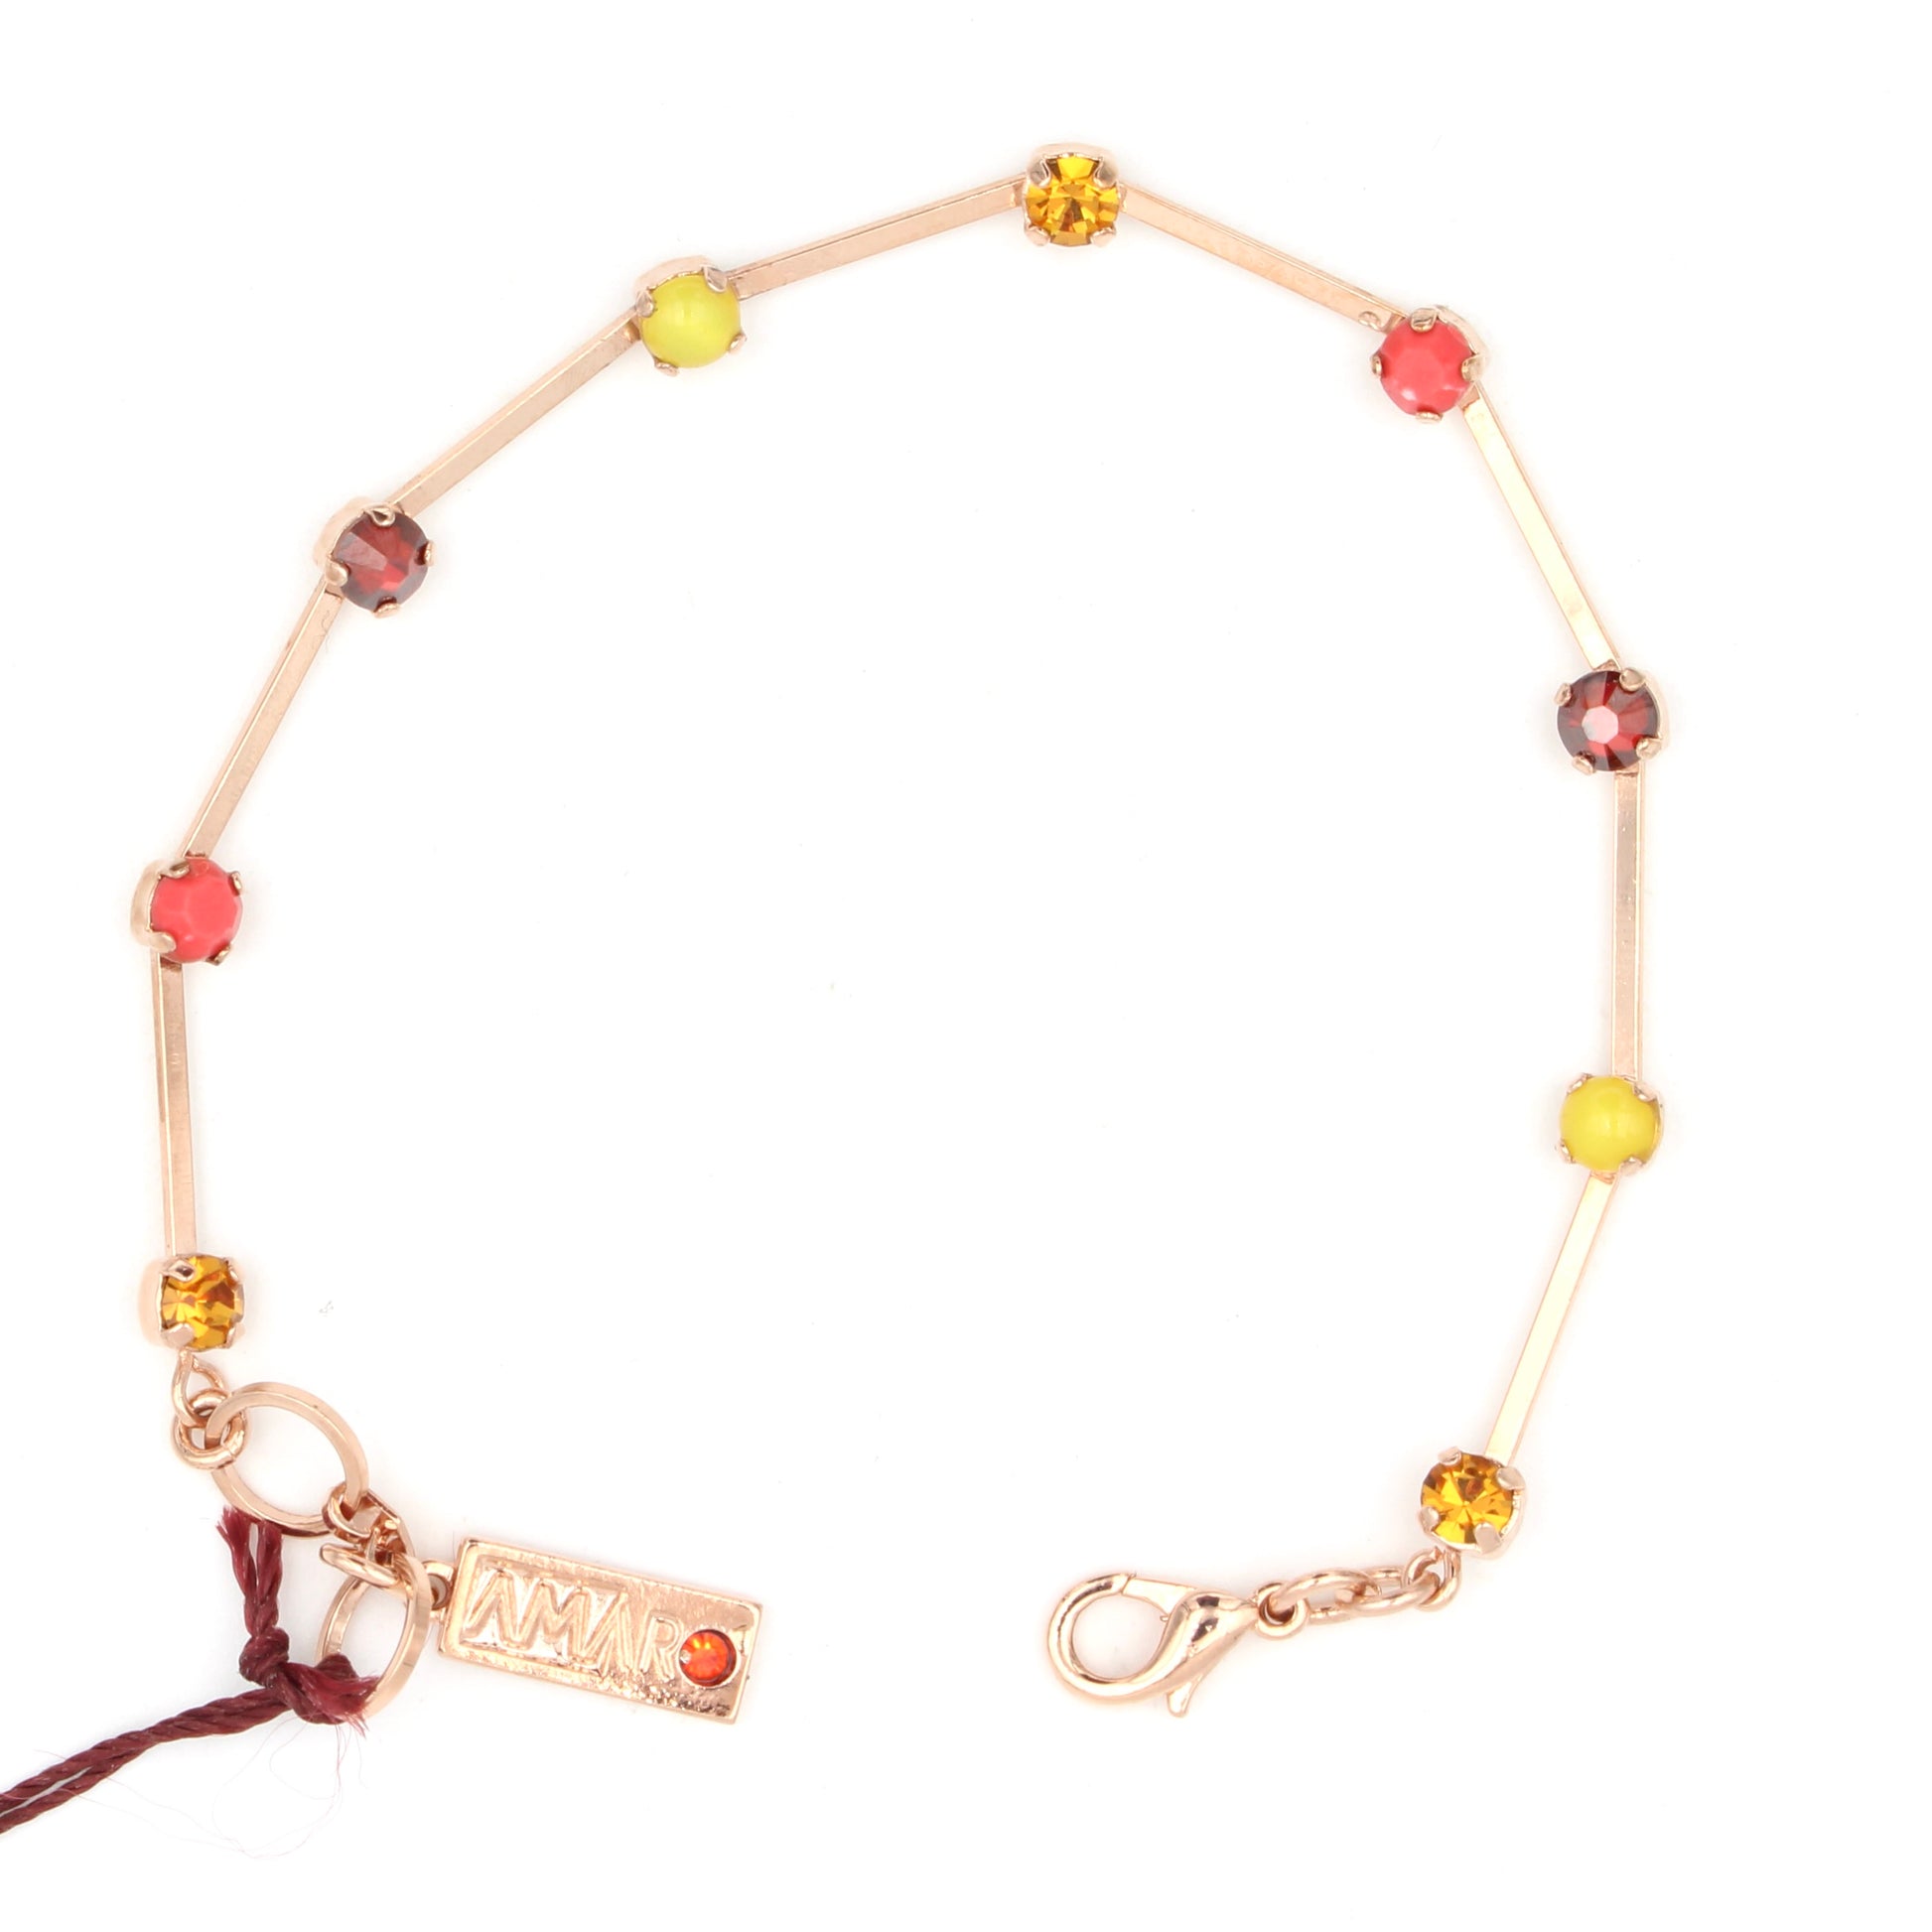 Spiritual Light Line Bracelet in Rose Gold by AMARO - MaryTyke's